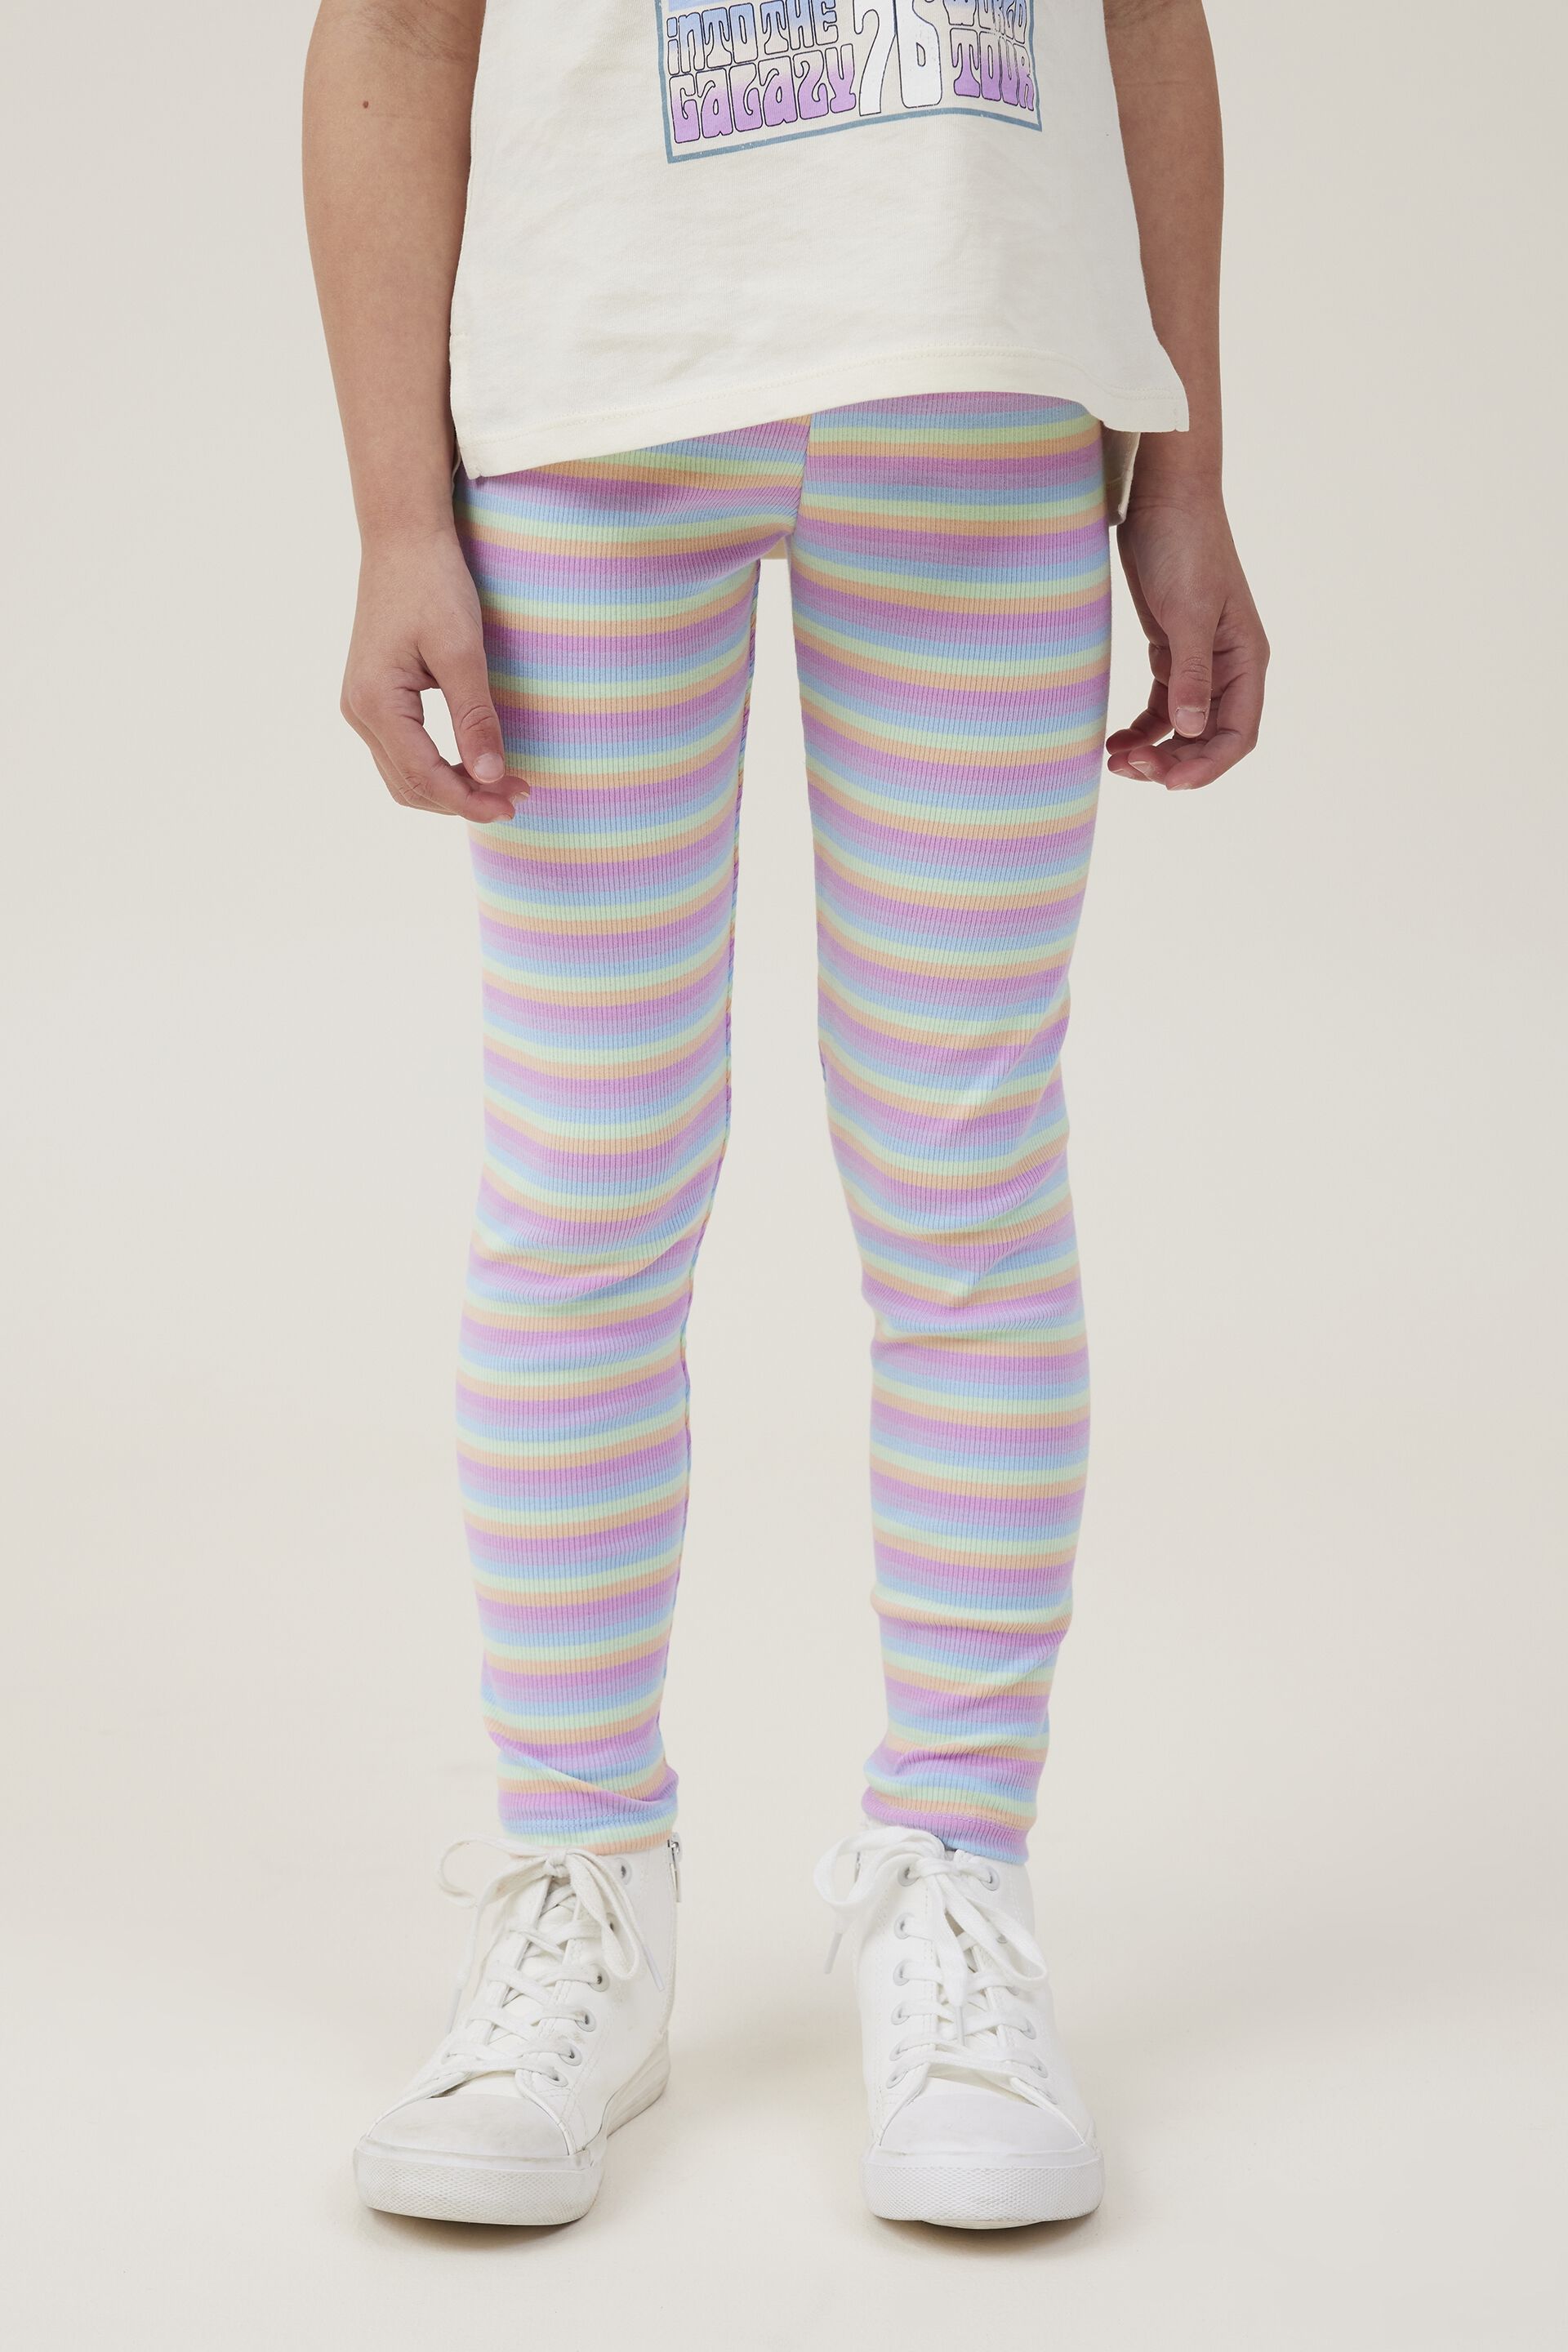 Fashion Girls Rainbow Pant Toddler Kid Girls Full Length Kids Girl Striped  Pants Long Trousers Children 2 3 4 5 6 7 Years   AliExpress Mobile